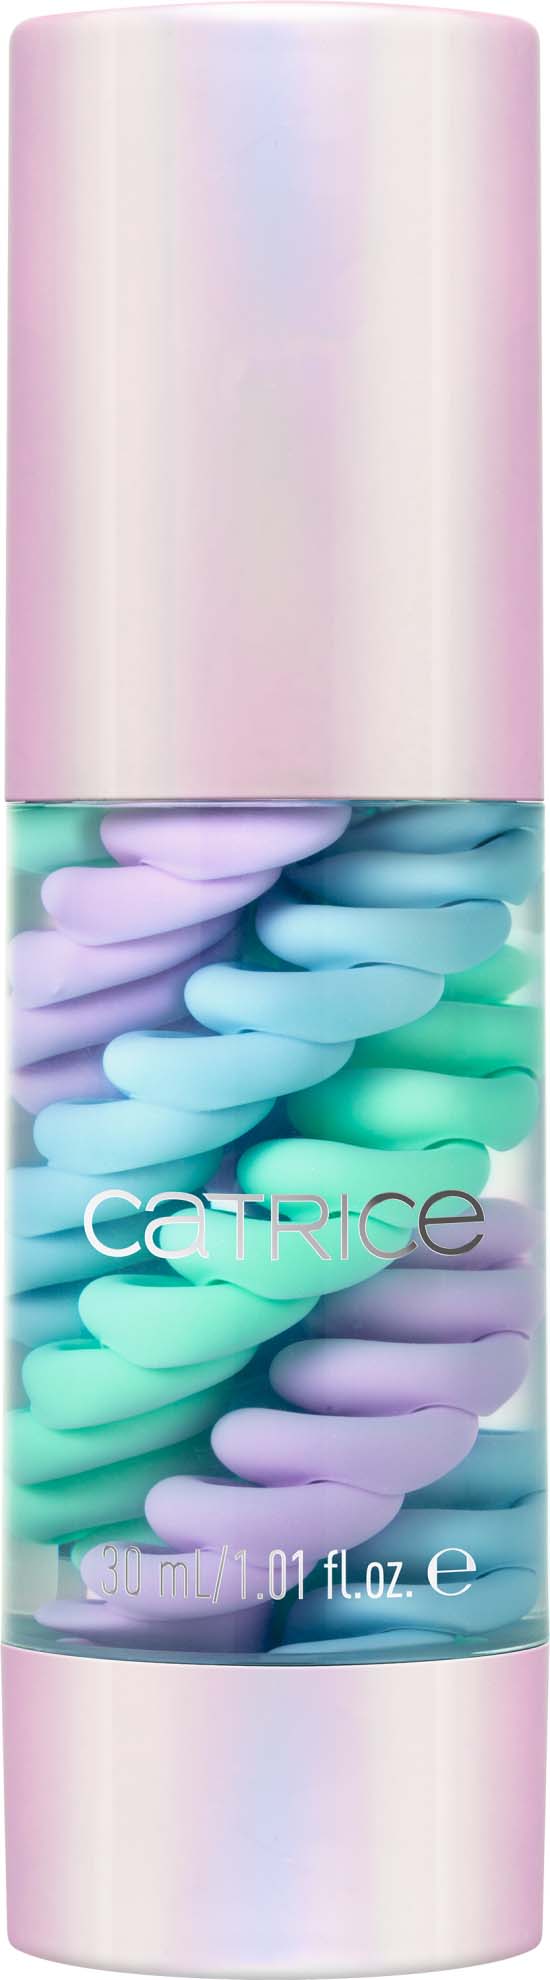 Catrice METAFACE Colour Correcting Glaze Primer 30 ml | Primer